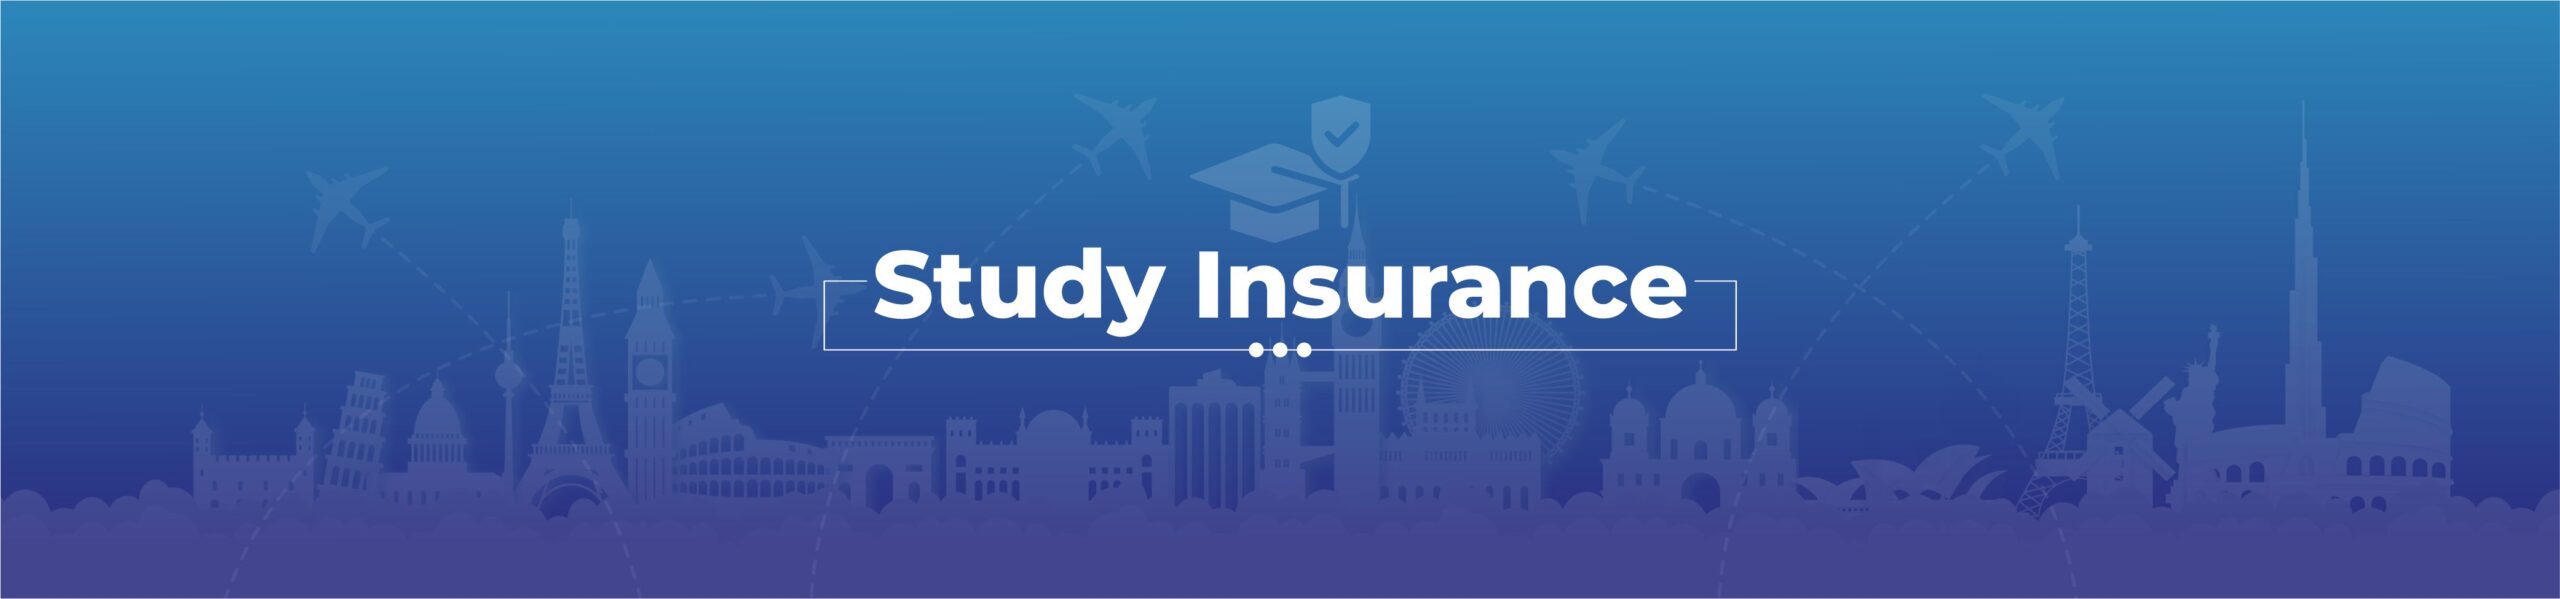 GHA Education|Study Insurance